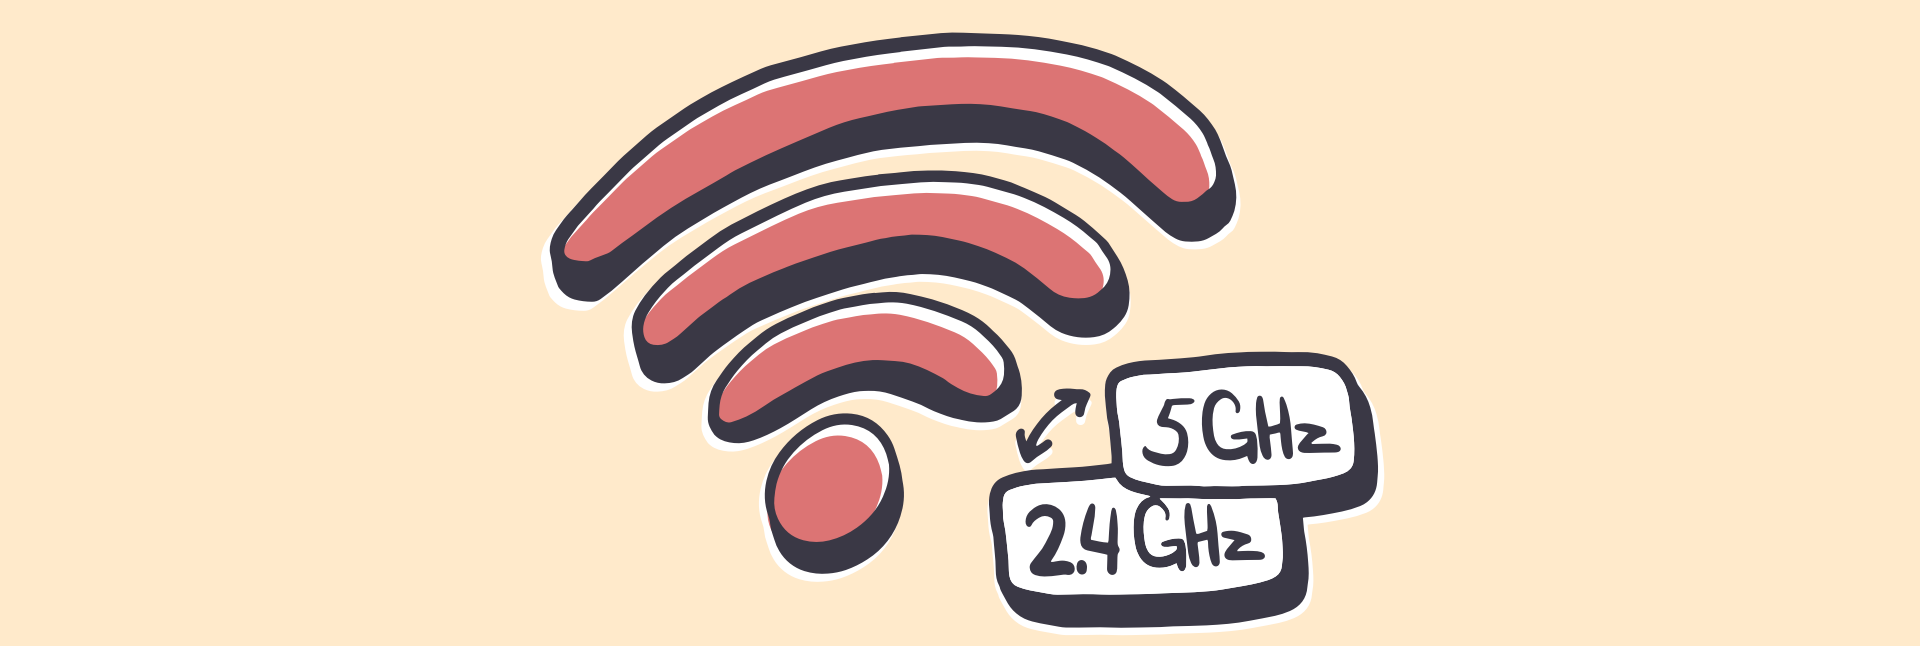 wi-fi 2